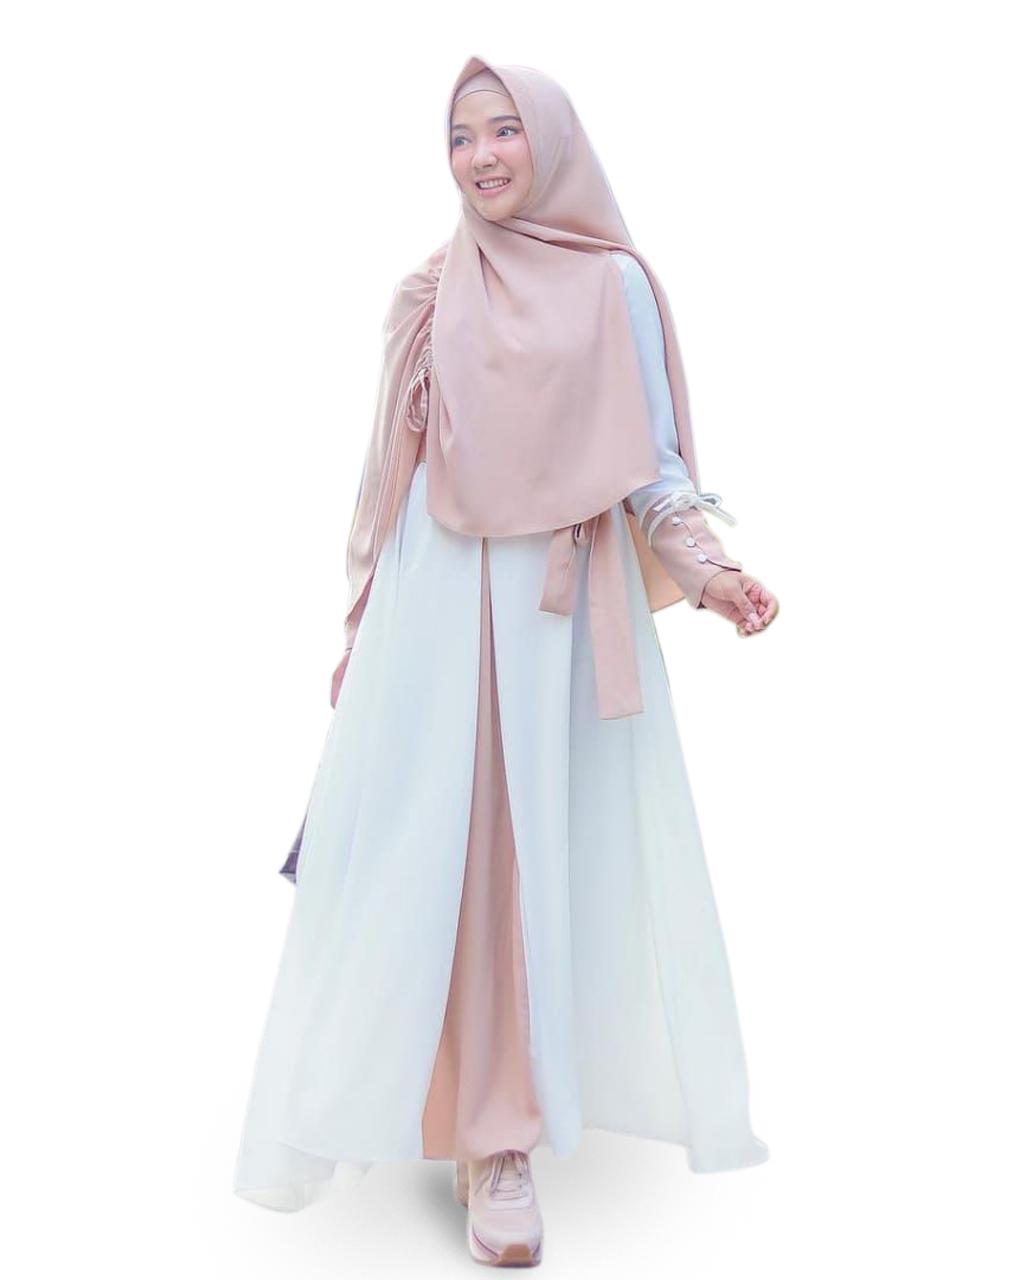 Baju Muslim Modern Gamis Mey Syari Wallycrepe (Free Hijab / Khimar ) Gamis Trendy Modern Wanita Baju Panjang Stelan Syar’i Polos Muslim Gaun Kerja Dress Pesta Murah Terbaru Pakaian Modis Simple Syari Couple Set Jumbo Casual Elegant 2019